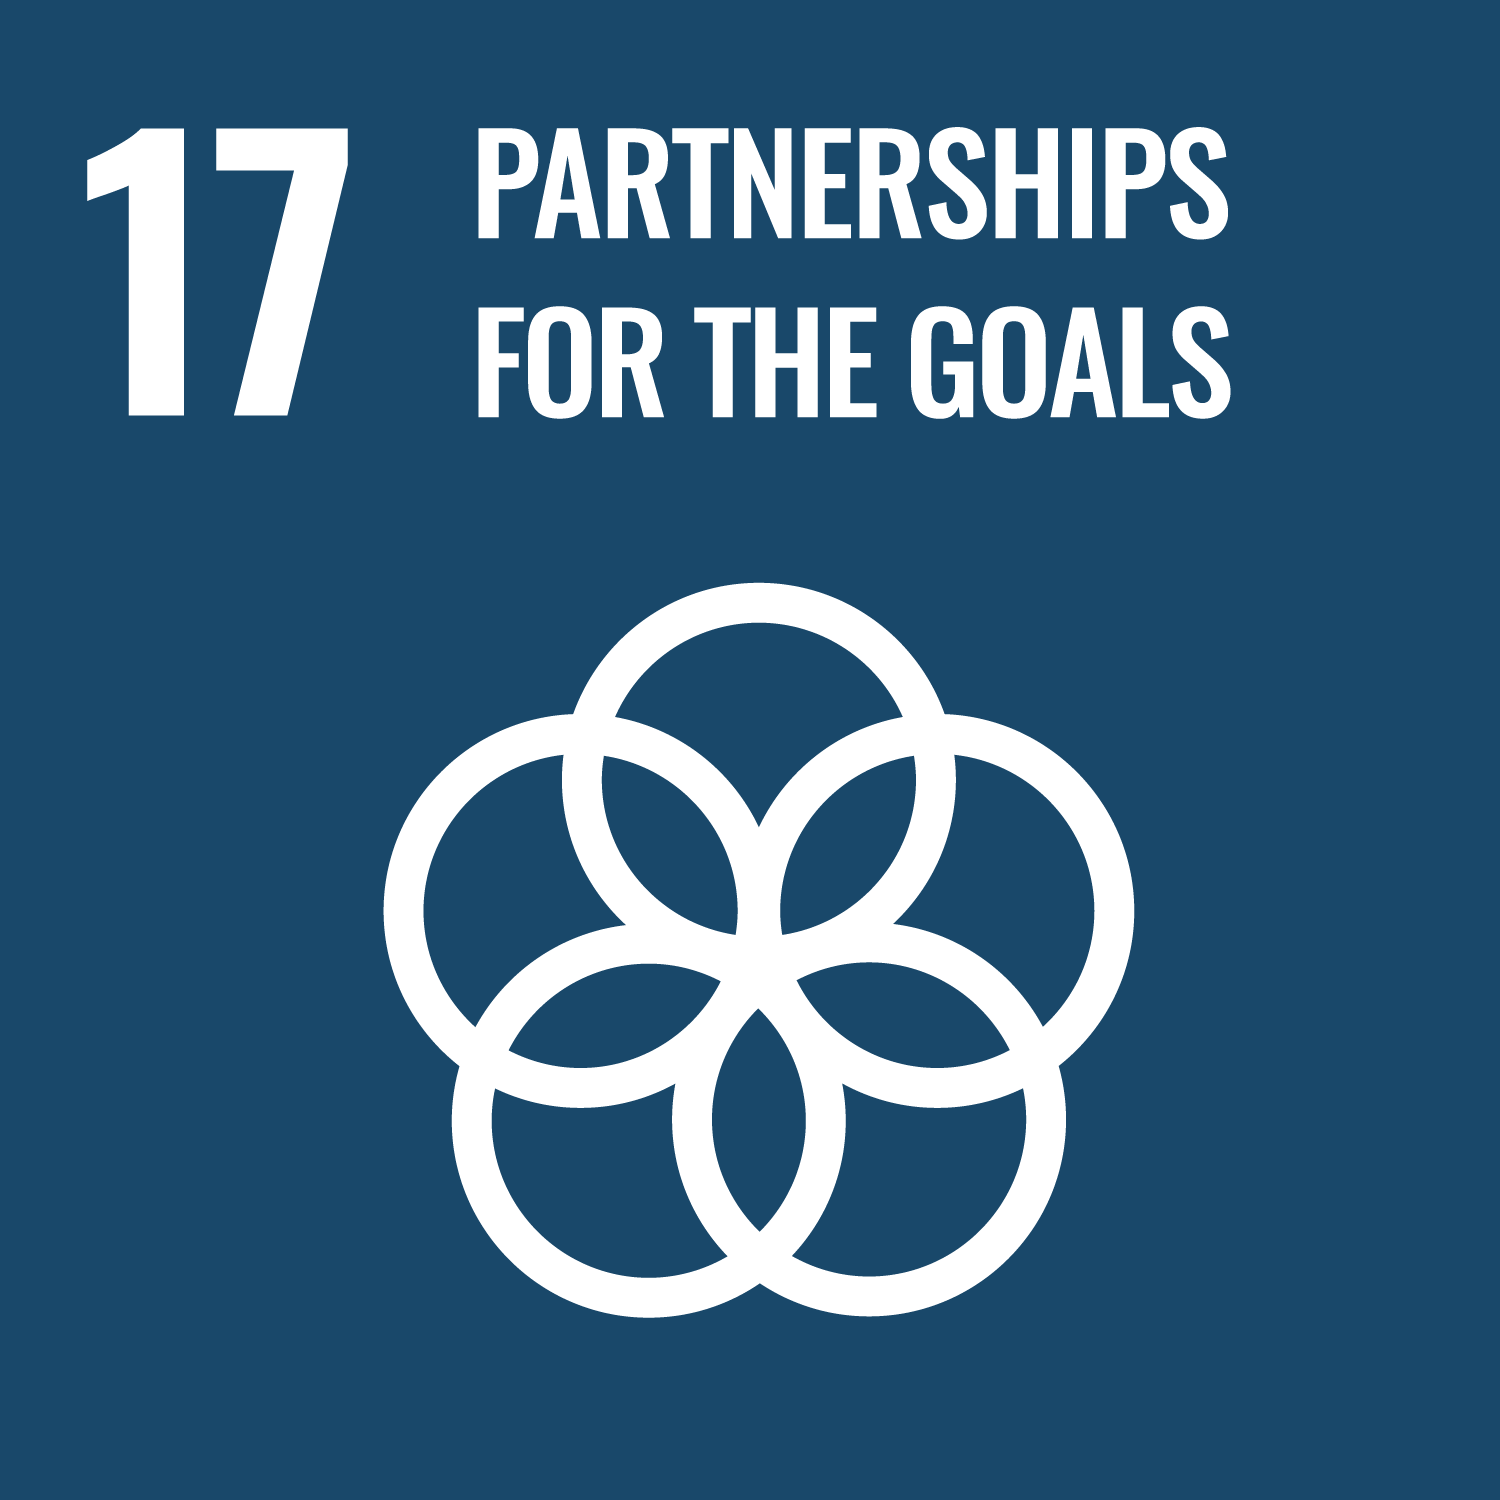 UN Sustainable Development Goal 17: Partnership for the Goals